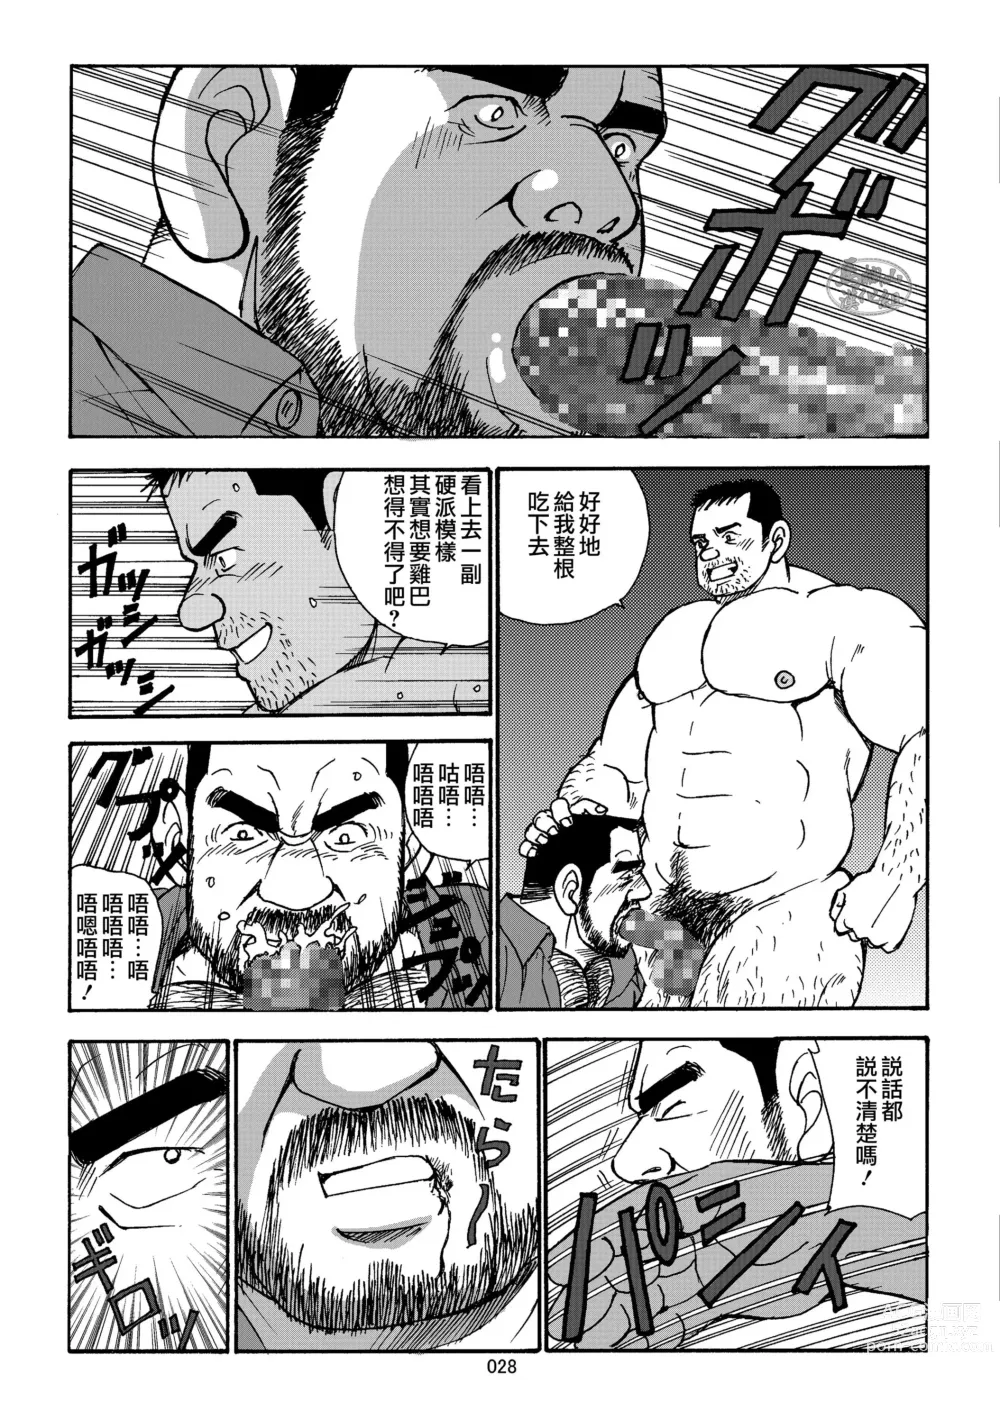 Page 28 of manga おいしい性活